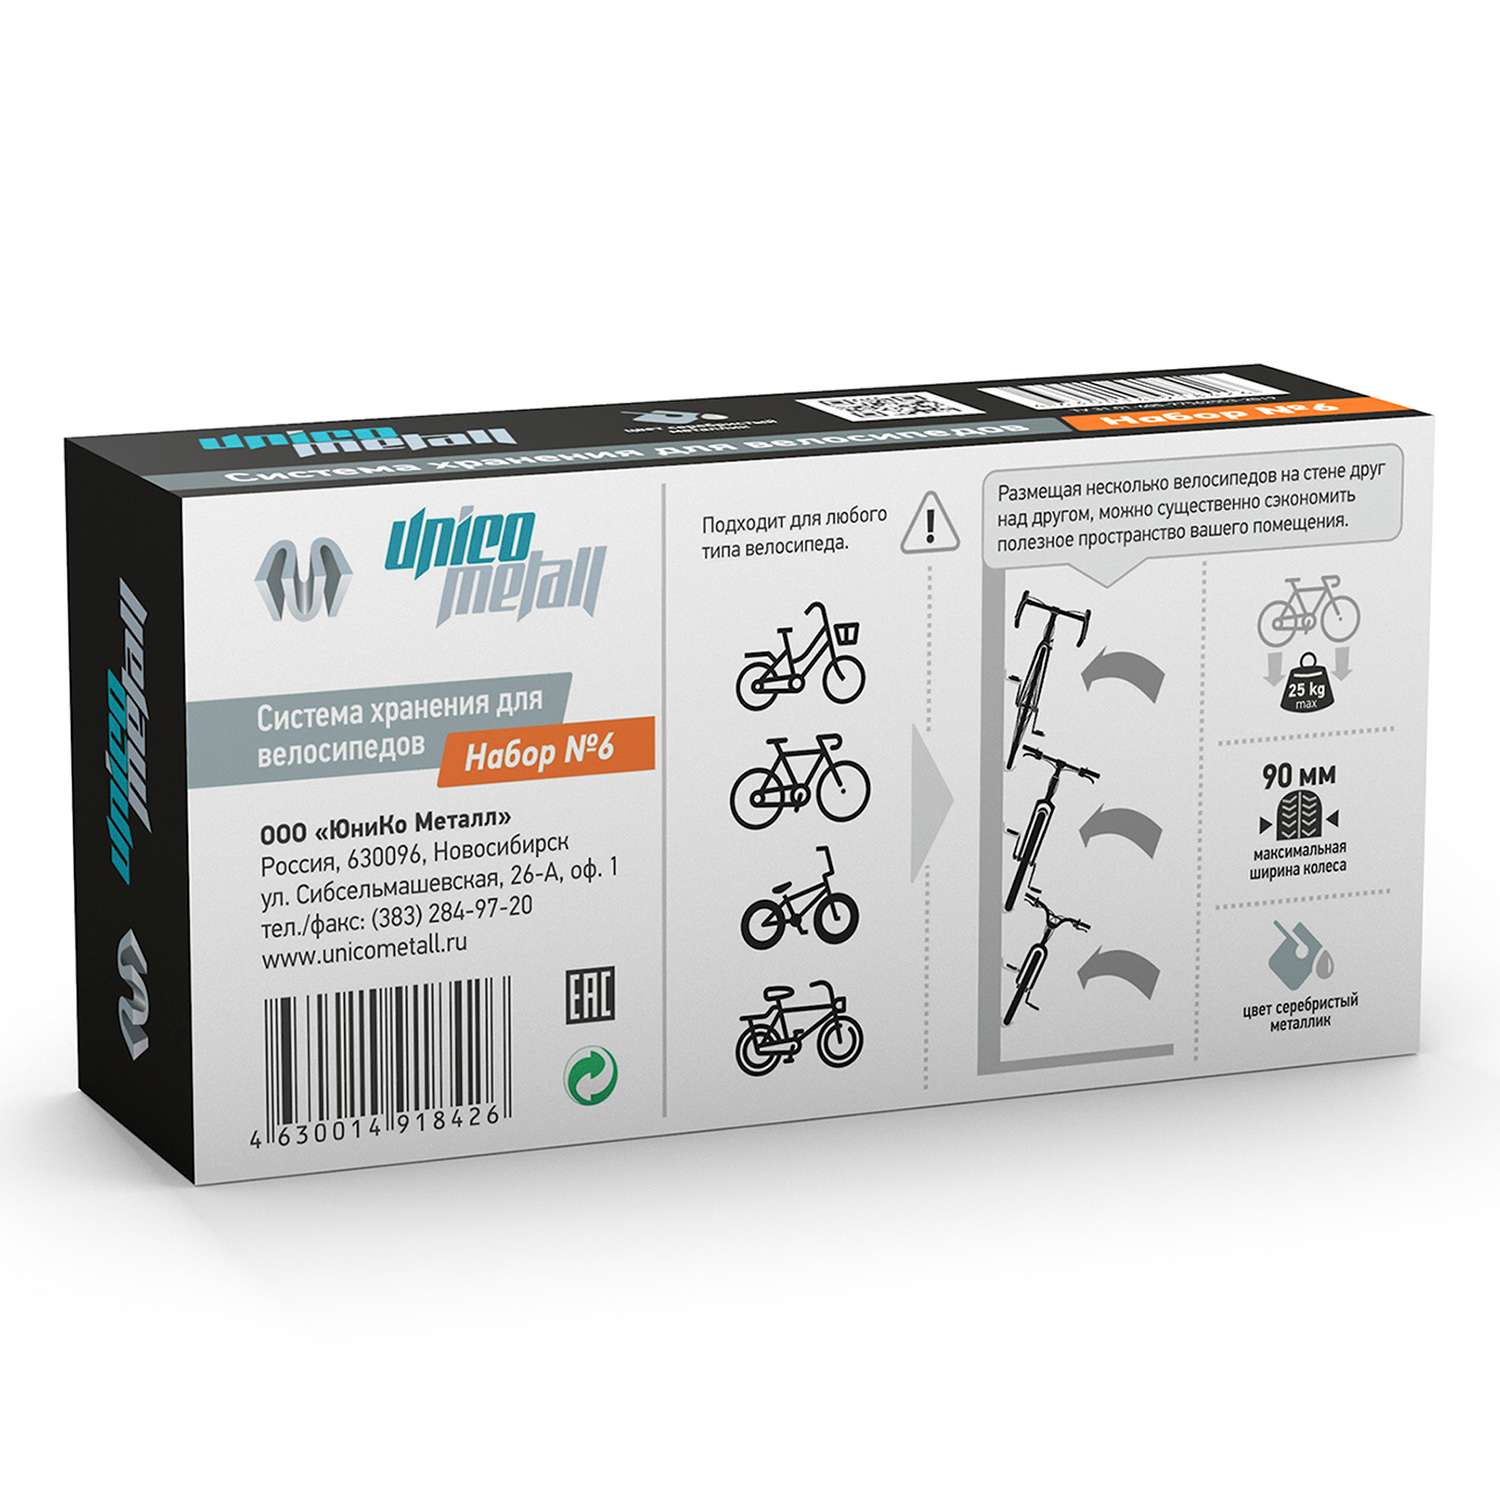 Система хранения Unico Metall для велосипедов Набор 6 4630014918426 - фото 3